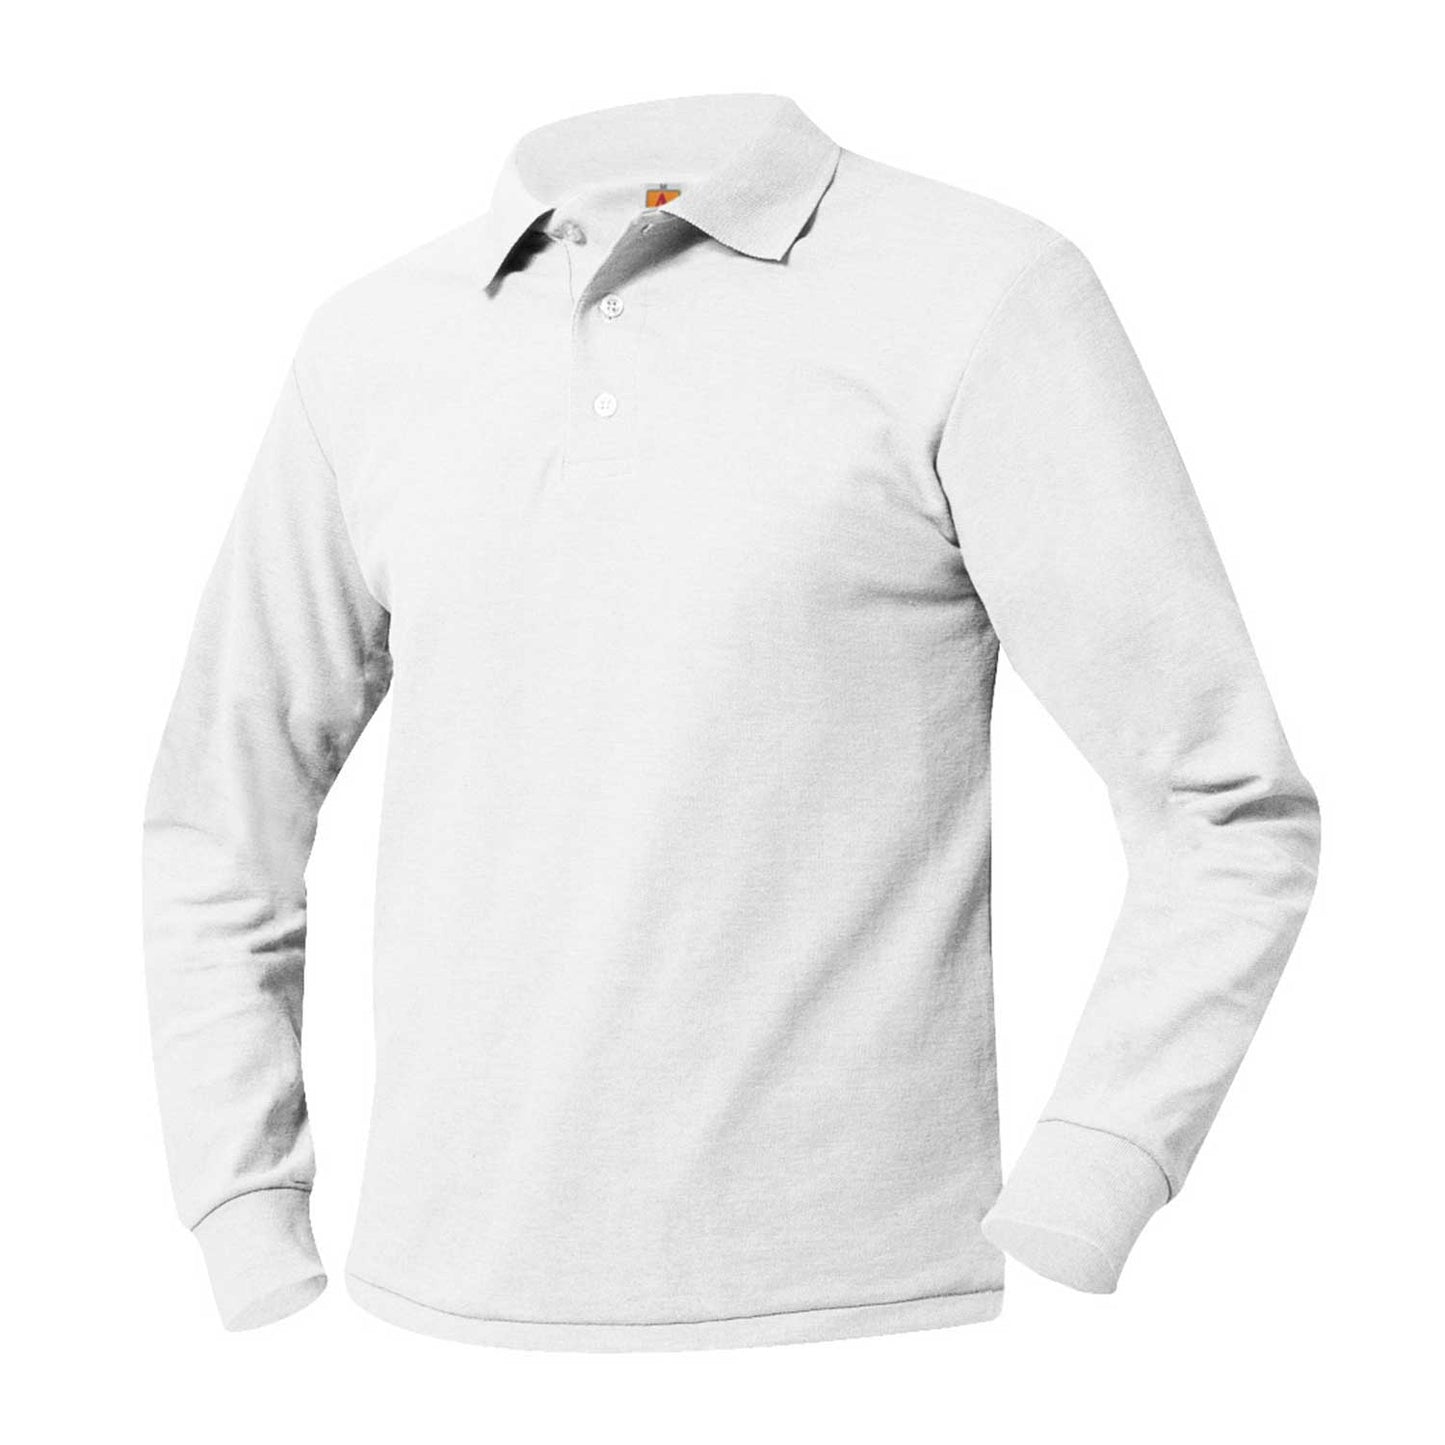 Unisex Pique Polo Shirt, Long Sleeves, Ribbed Cuffs w/Logo - 1108